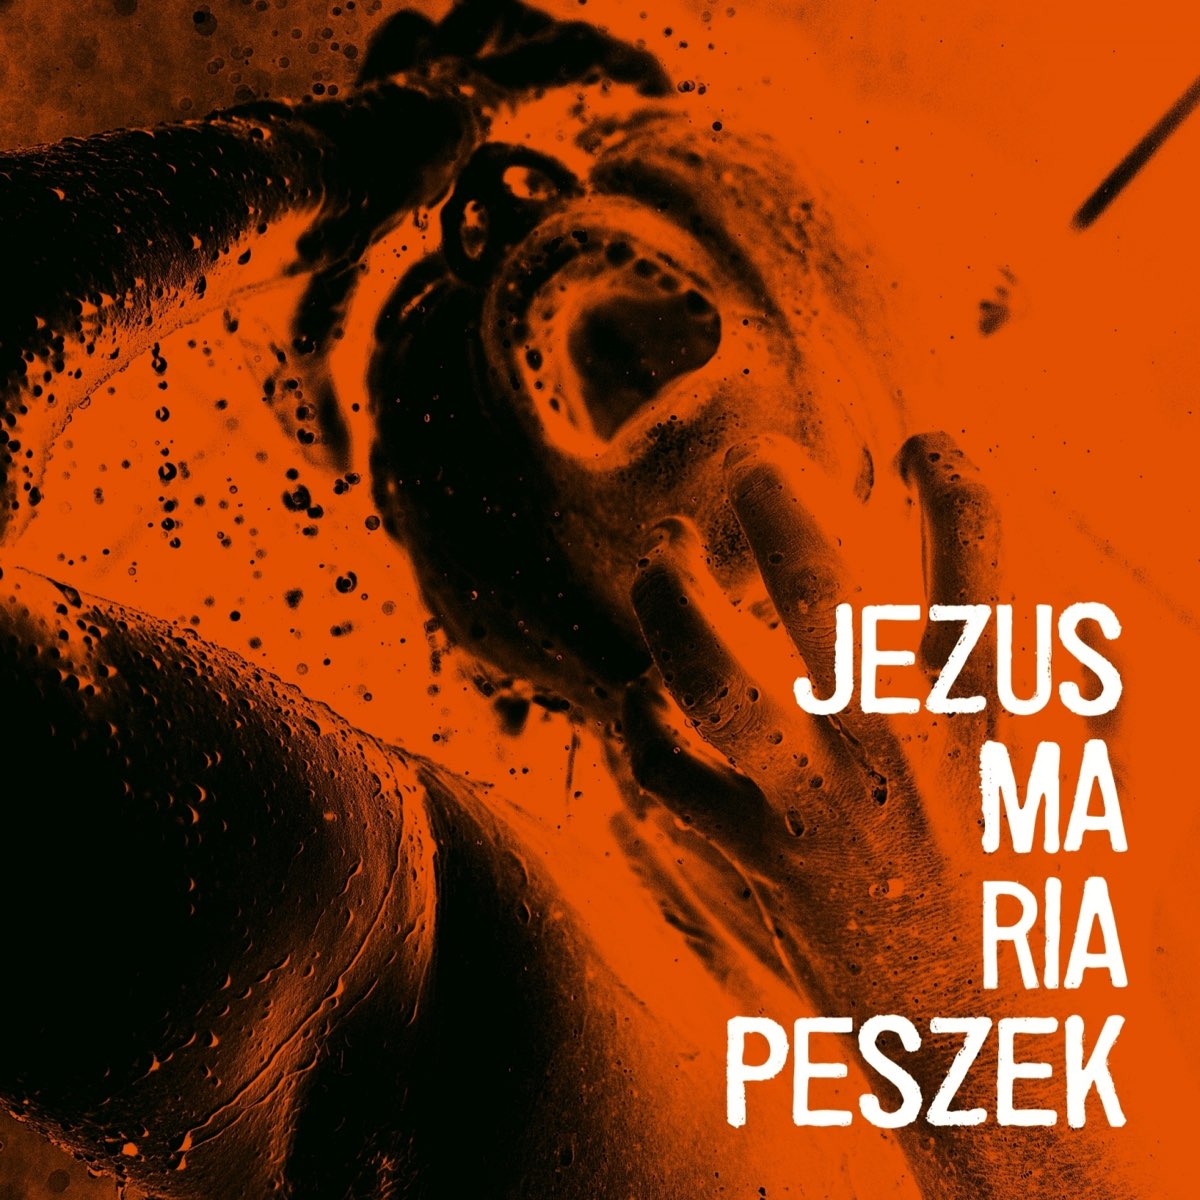 Maria Peszek — Amy cover artwork